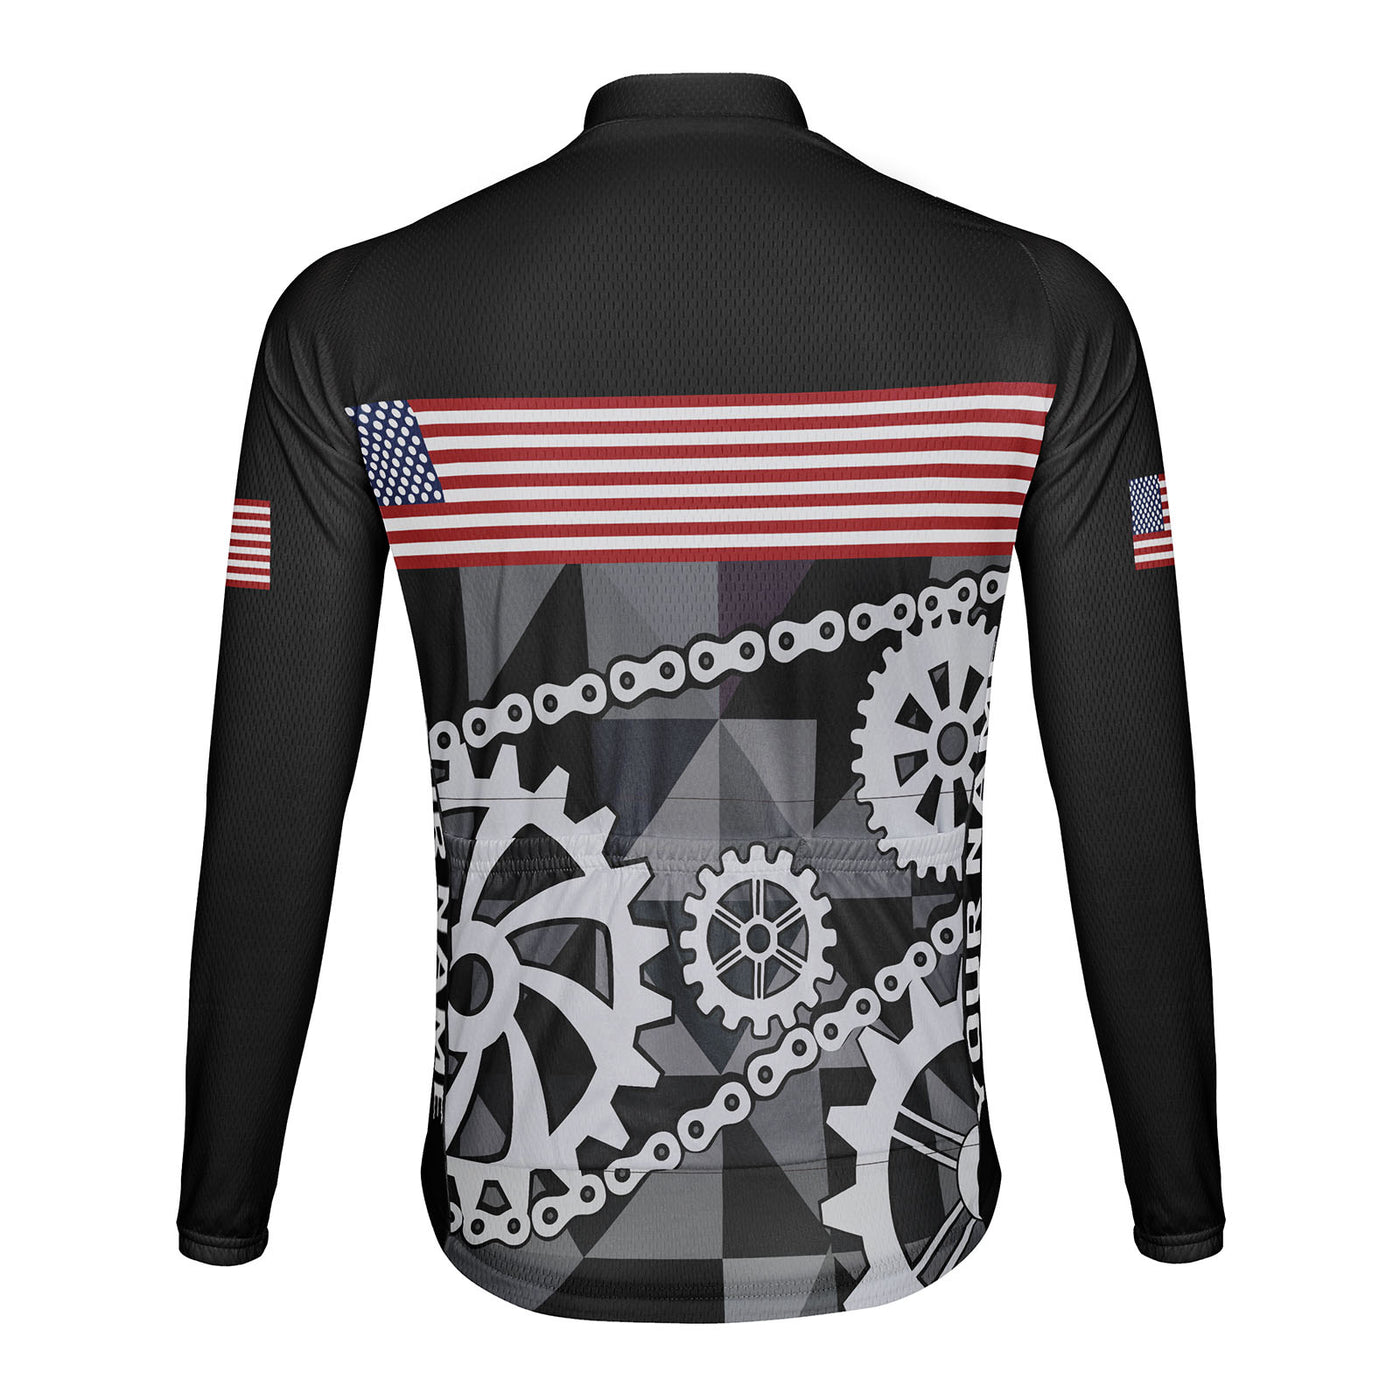 Customized USA America Men's Winter Thermal Fleece Cycling Jersey Long Sleeve